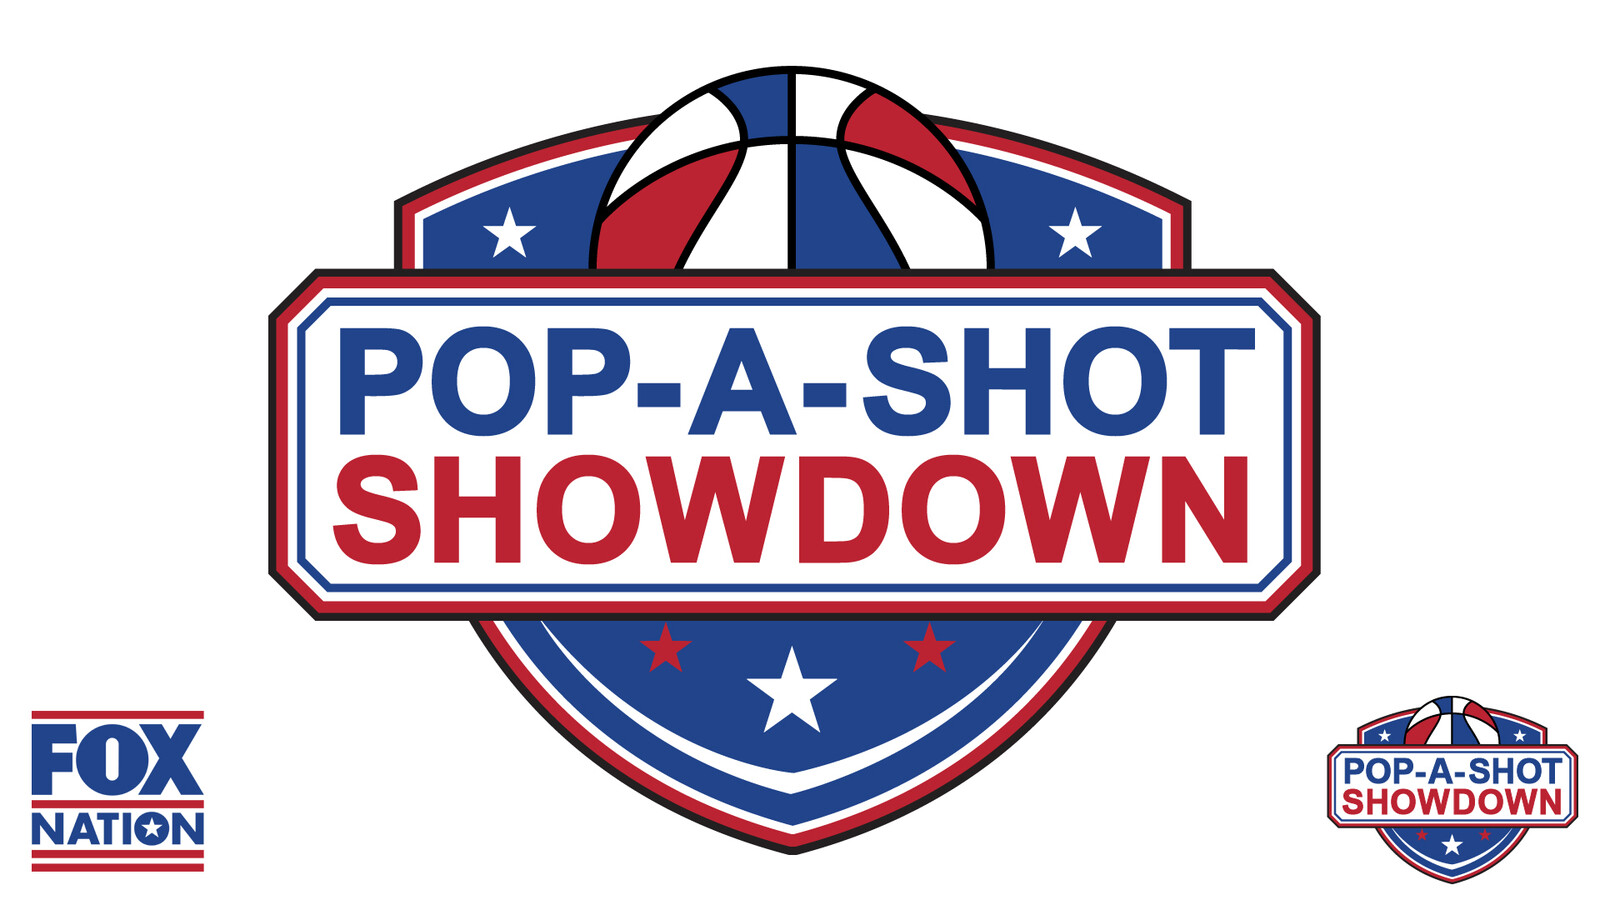 Pop-A-Shot Showdown Logo
©FOX NATION